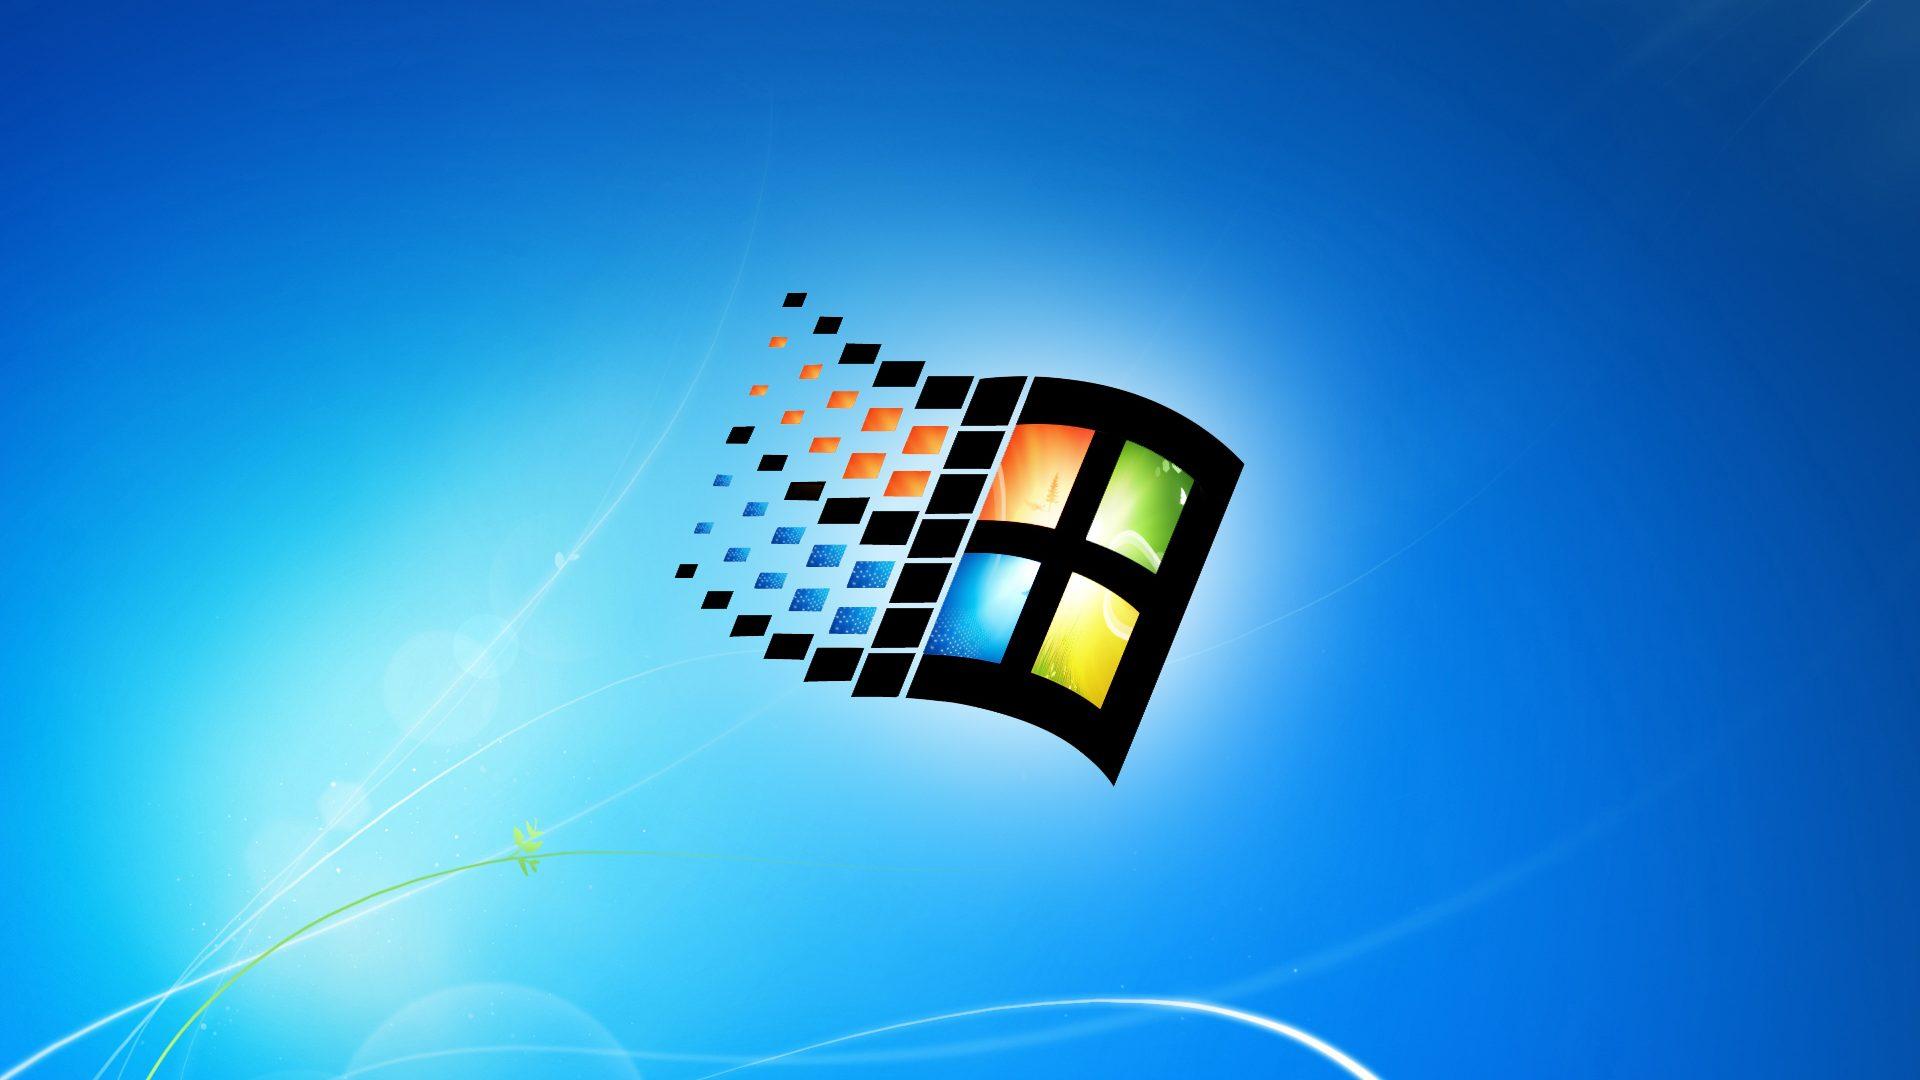 Microsoft Windows 95 Logo - Classic Microsoft Windows 95 Logo Wallpaper | PaperPull